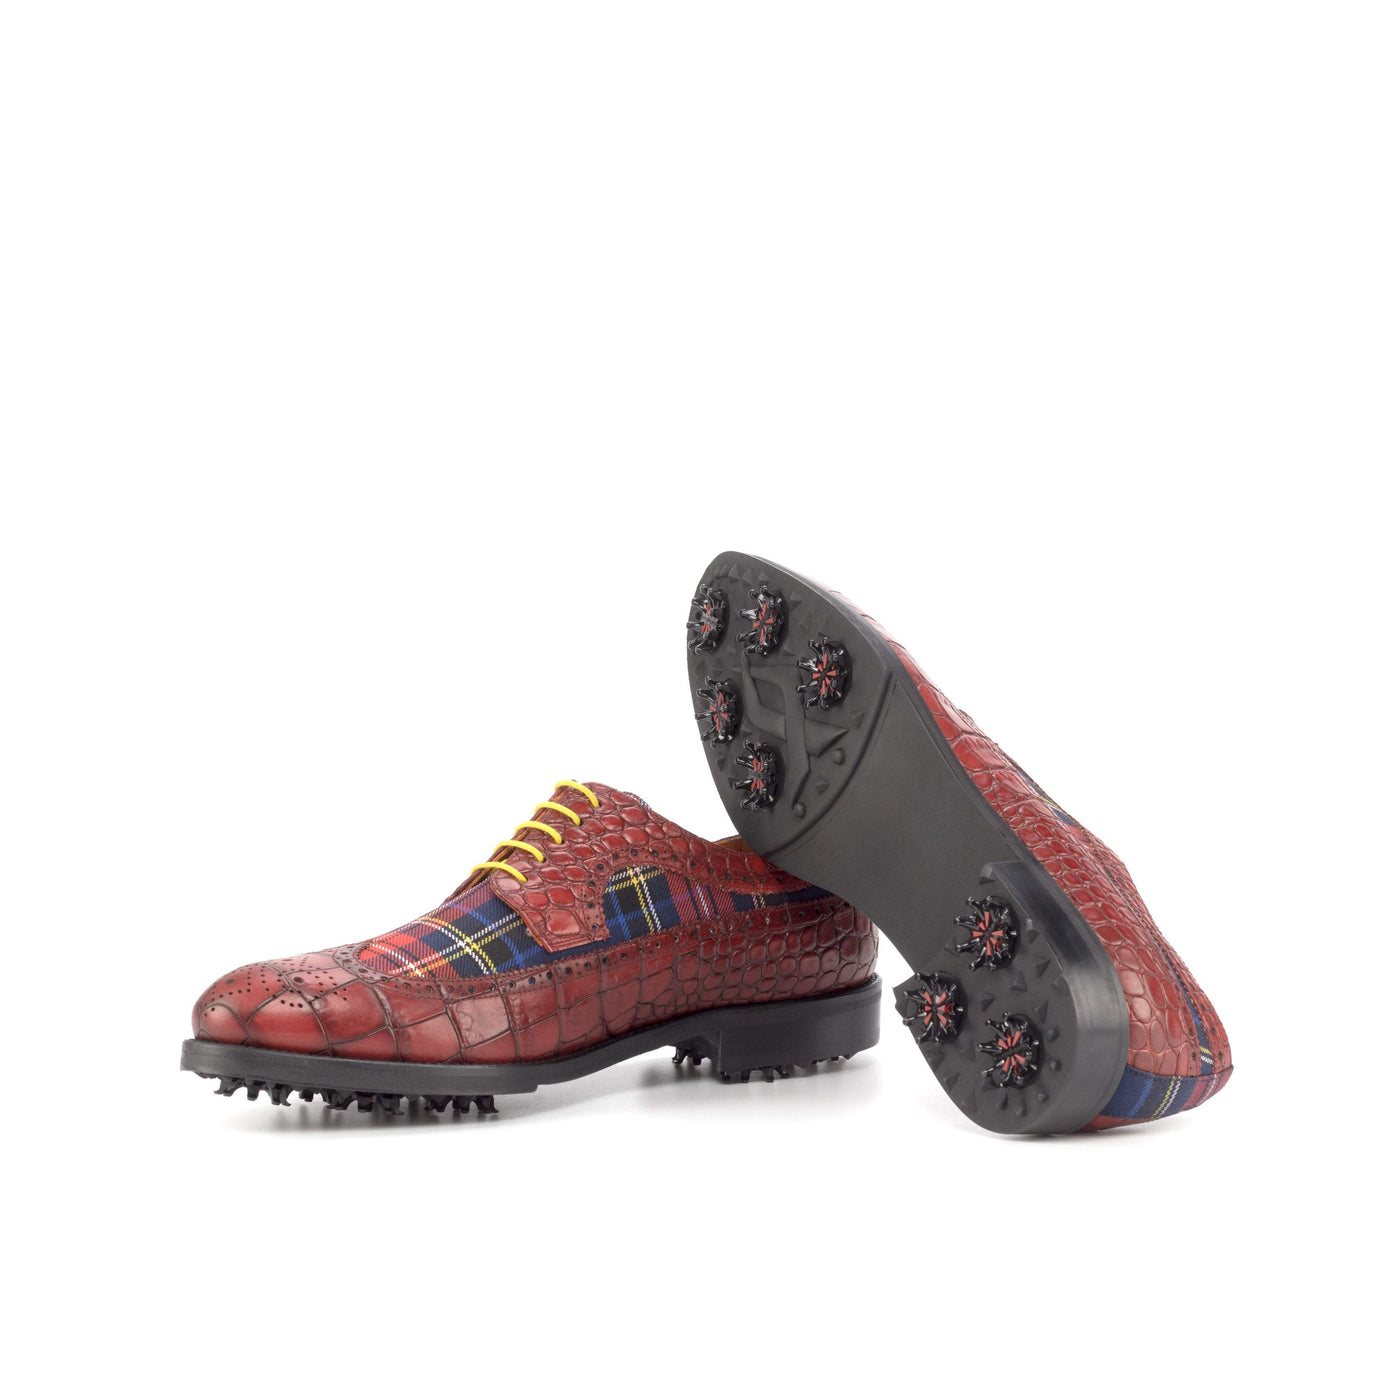 Men's Longwing Blucher Golf Shoes Leather Blue Red 4859 2- MERRIMIUM